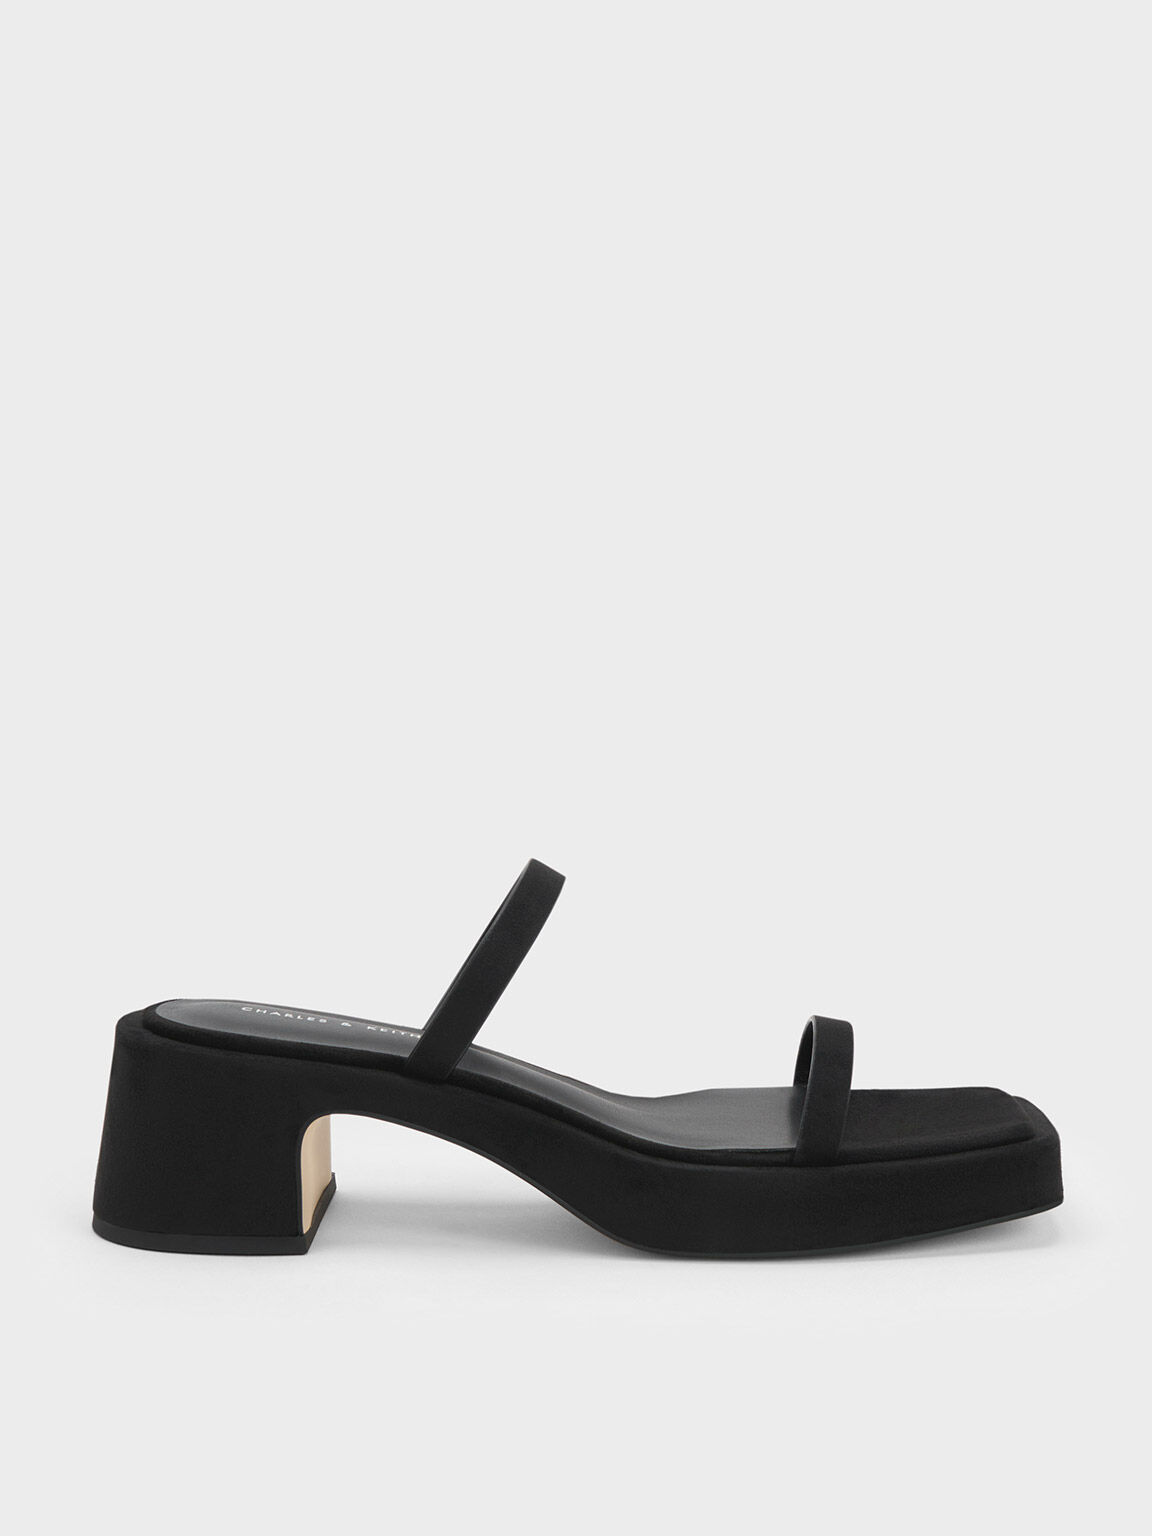 Sandal Platform Square-Toe Textured, Black, hi-res